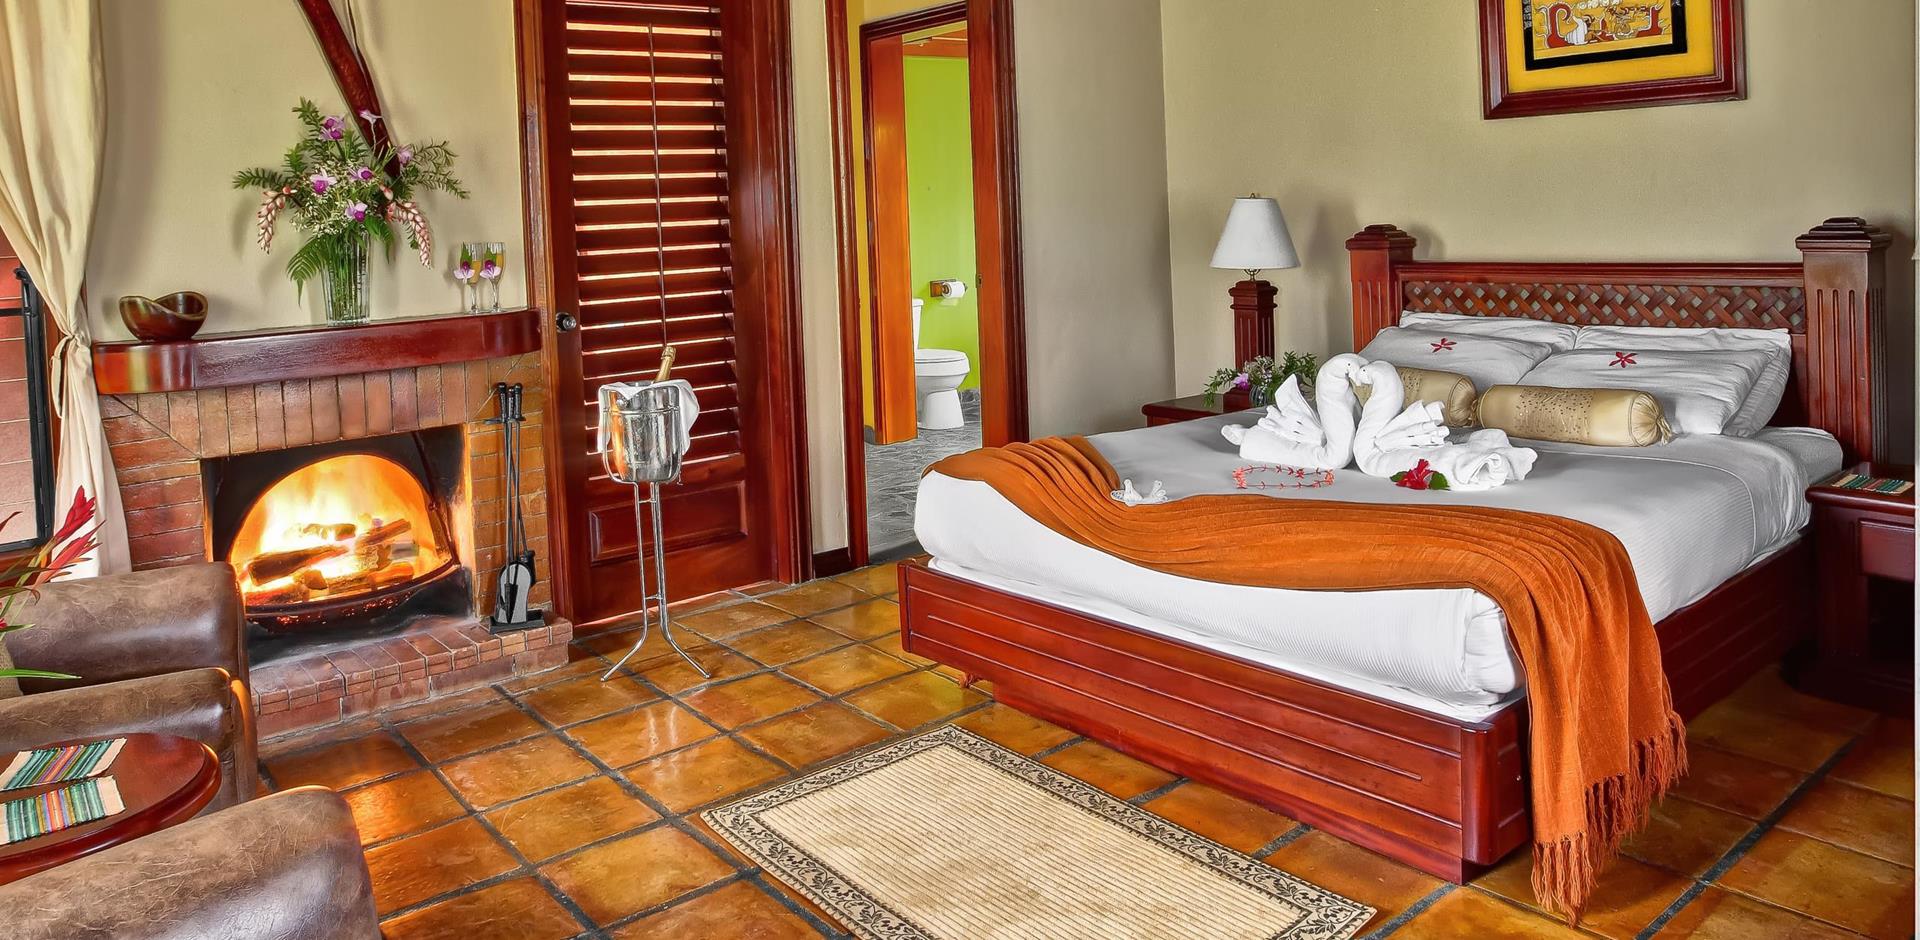 Bedroom, Hidden Valley Inn, Mountain Pine Ridge, Belize, Central America